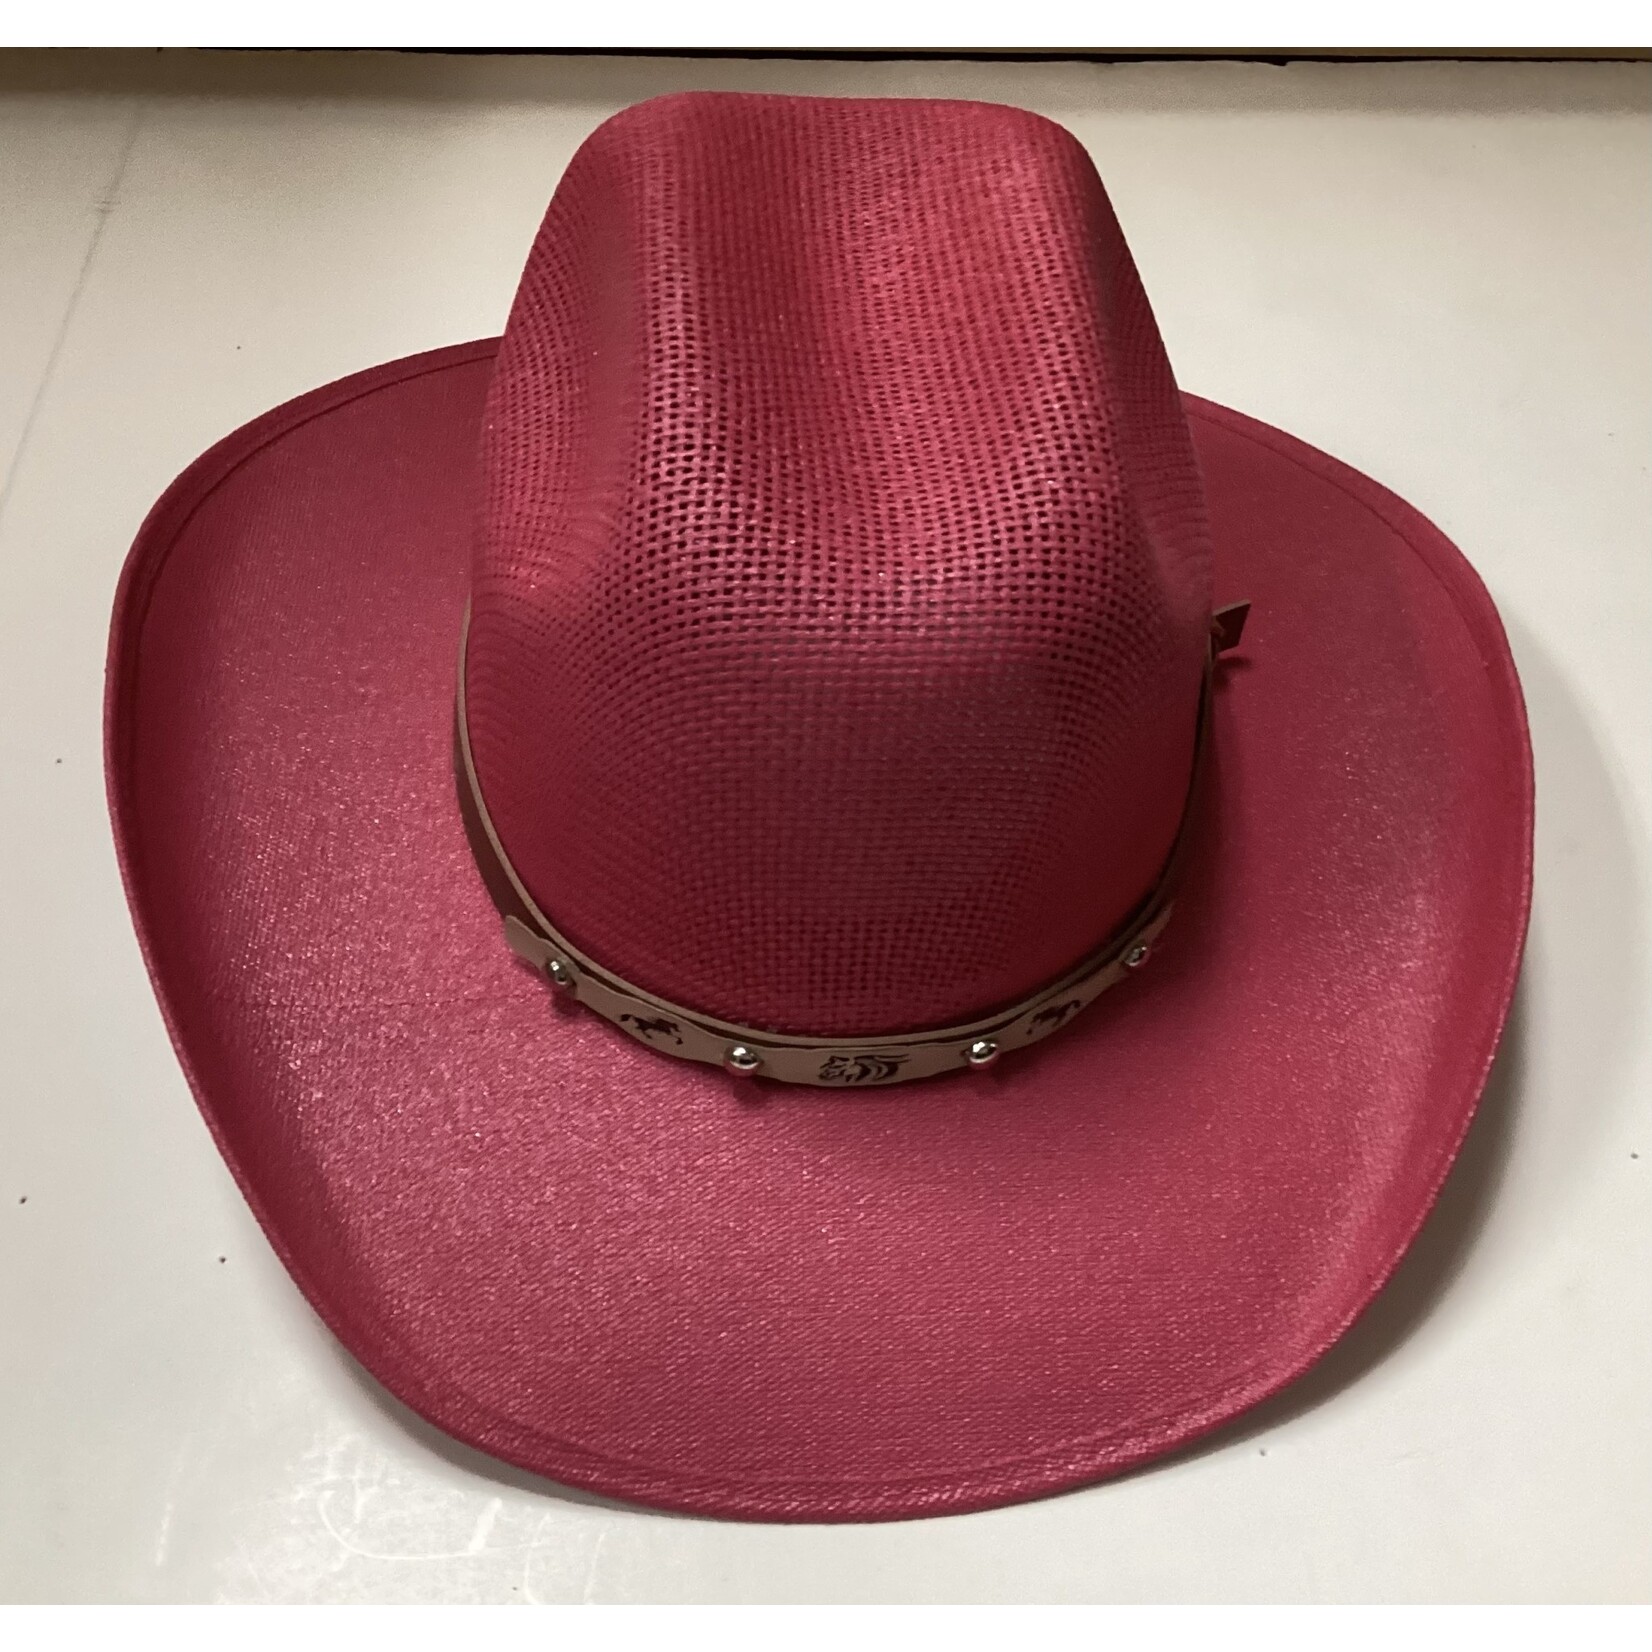 Modestone Child's Straw Cowboy Hat